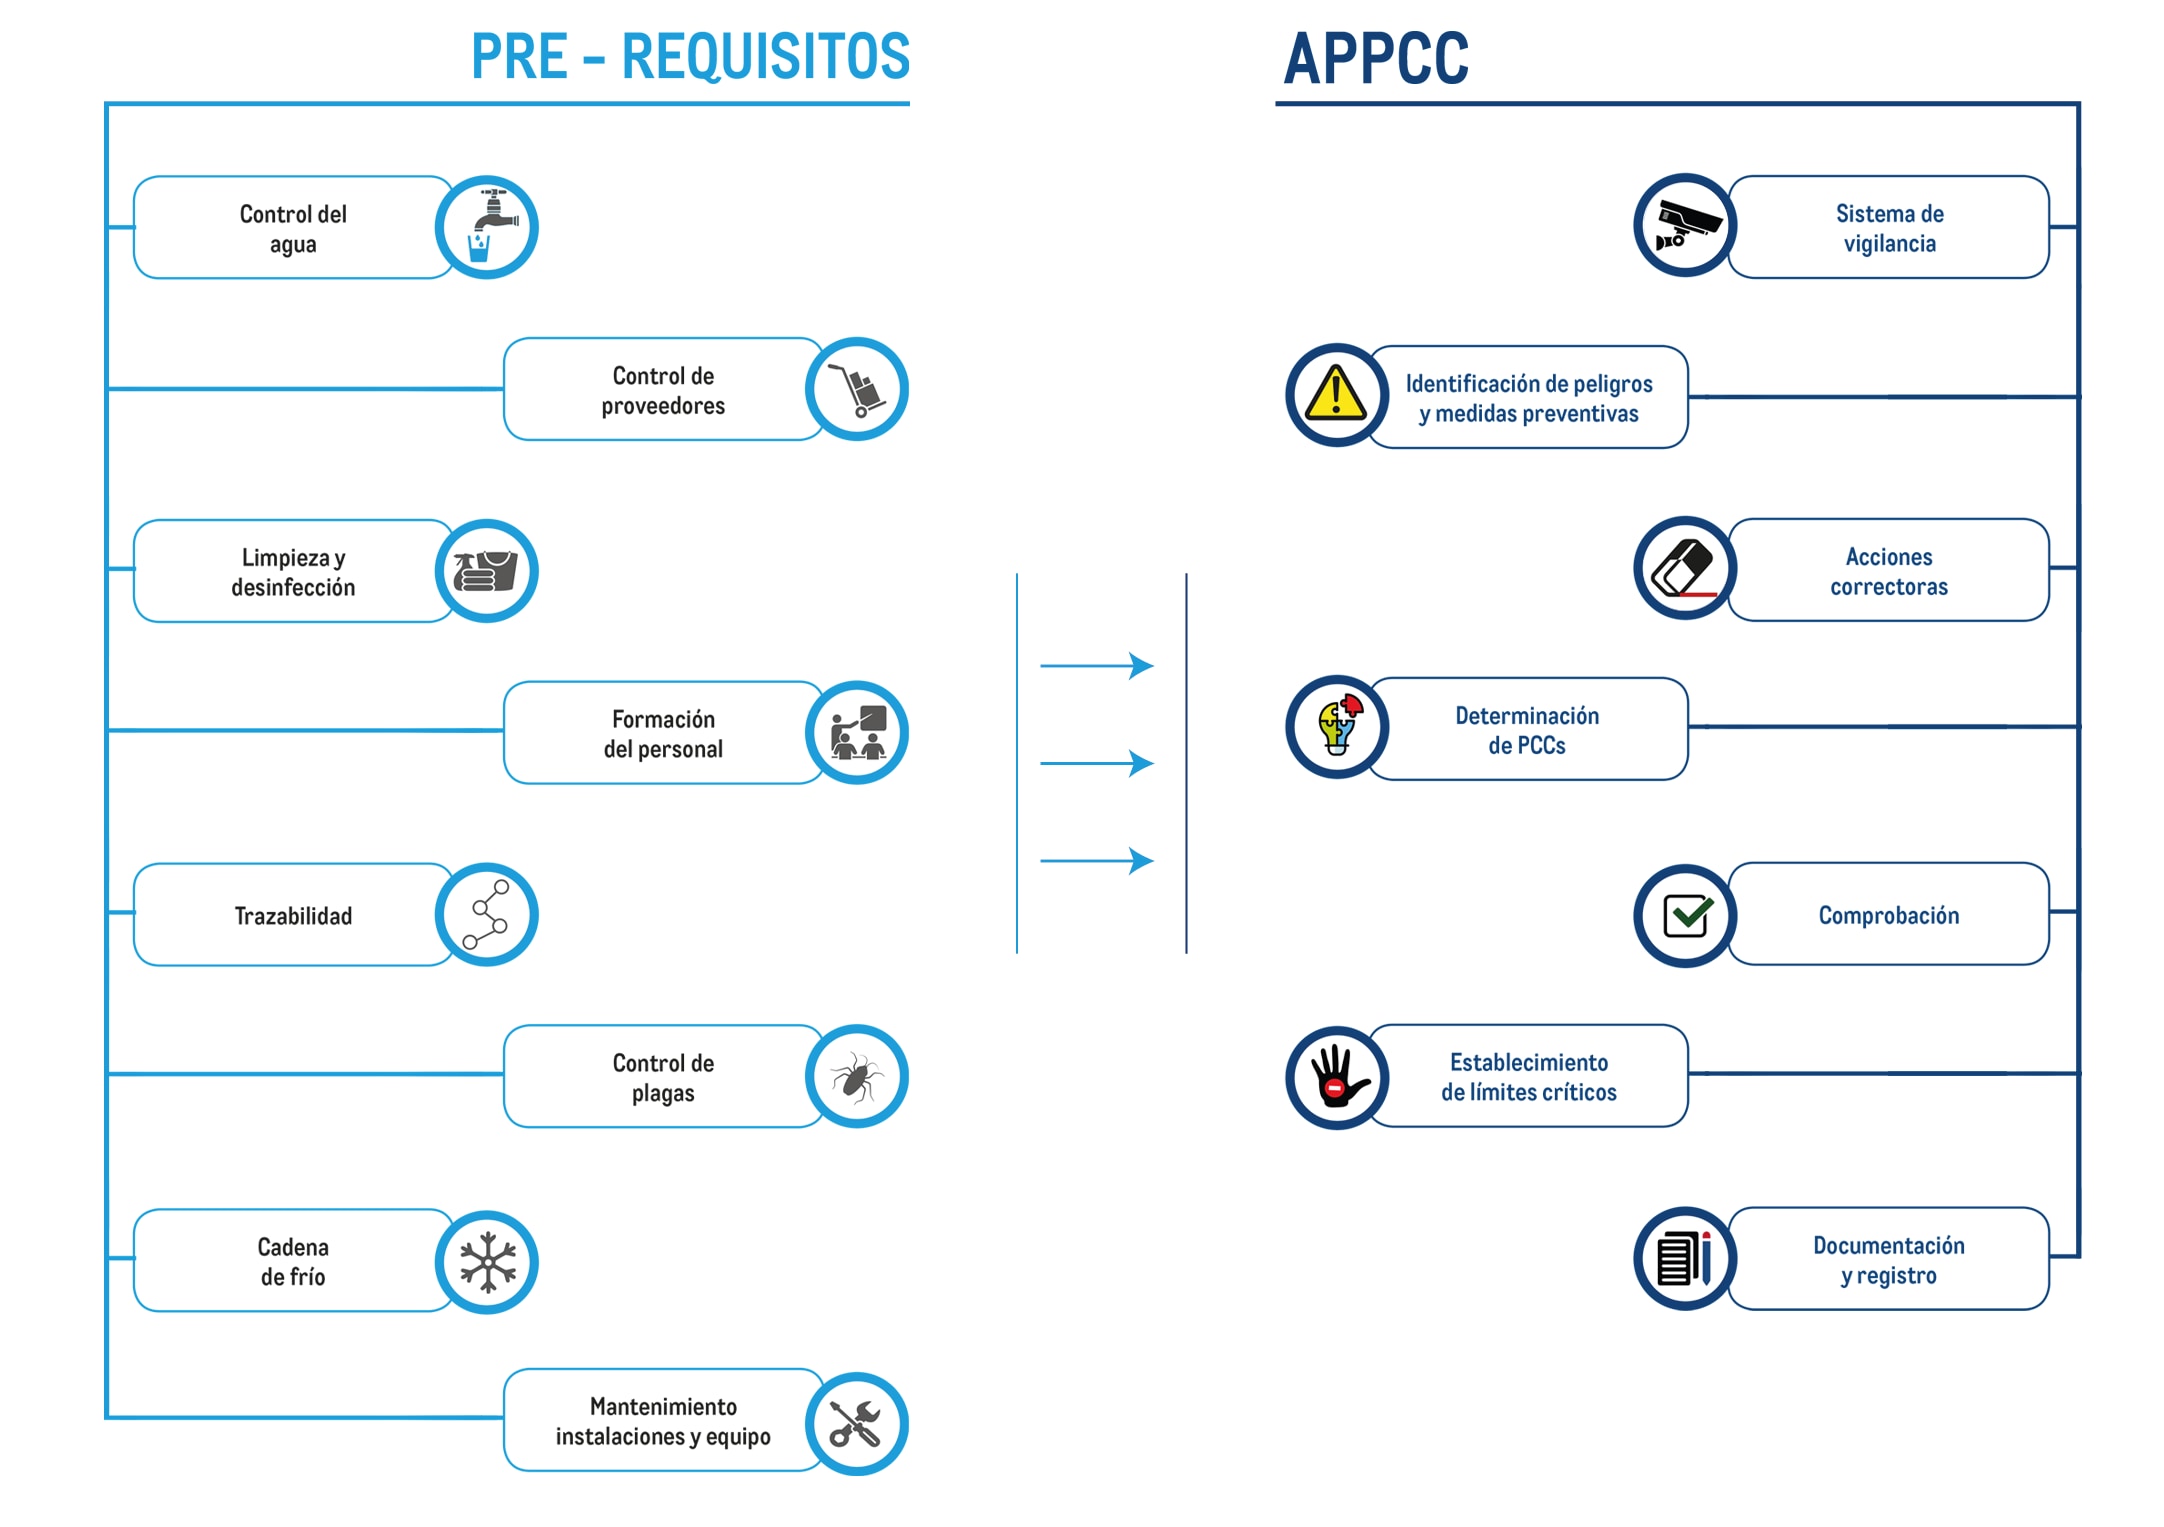 Requisitos de APPCC